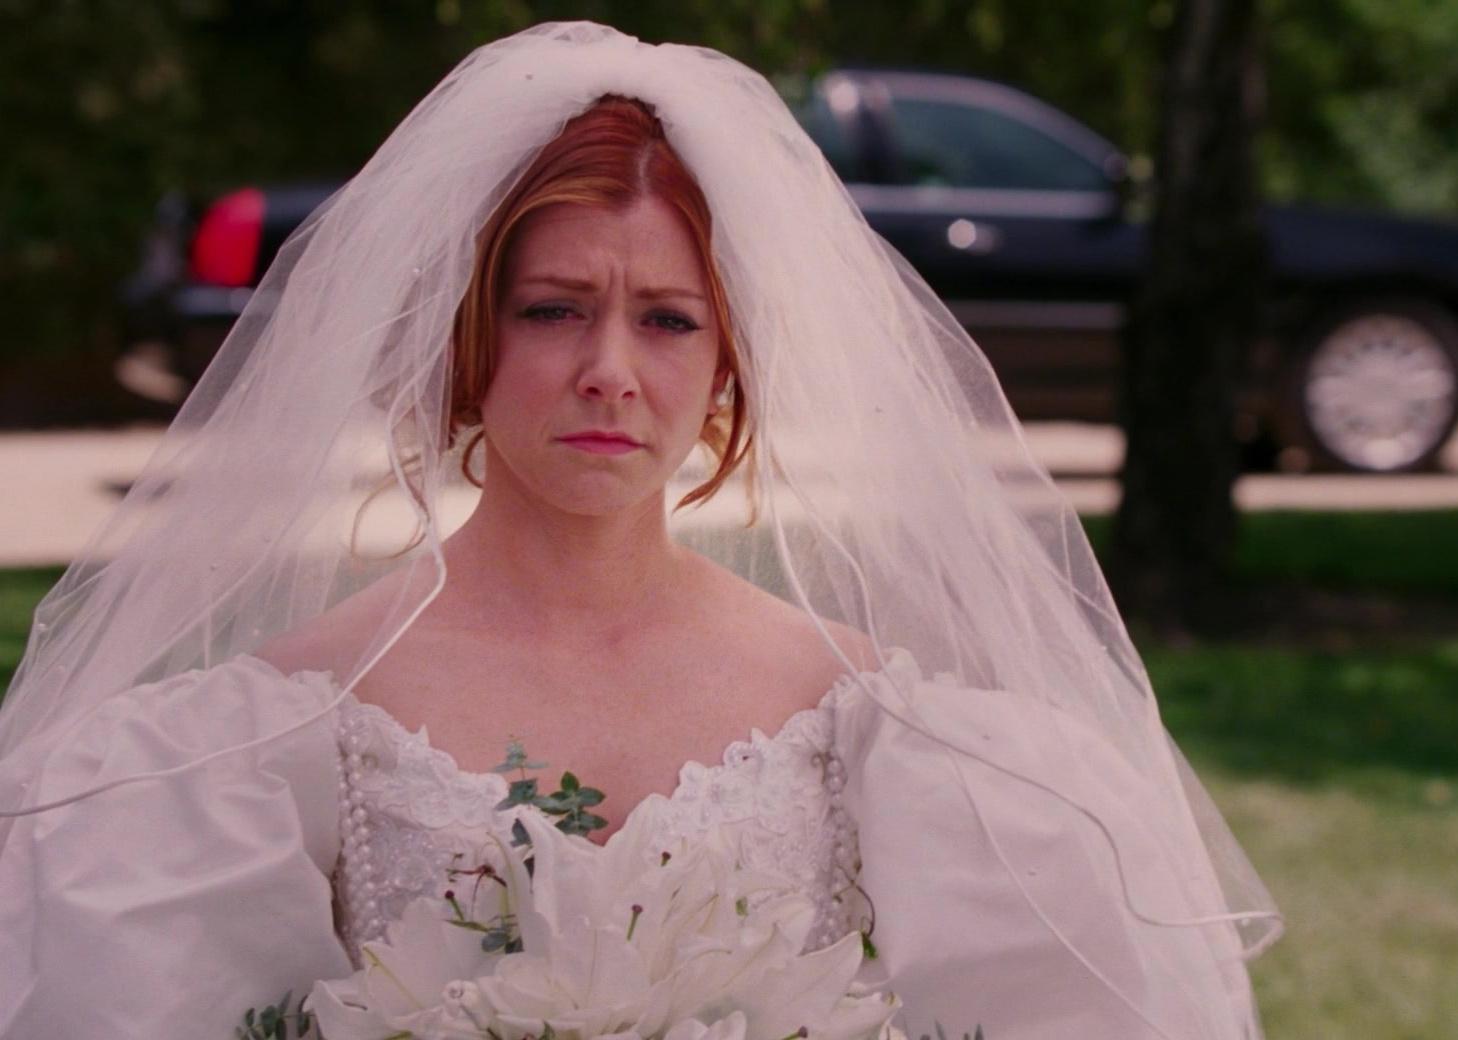 Alyson Hannigan looking sad in an oversized wedding dress.